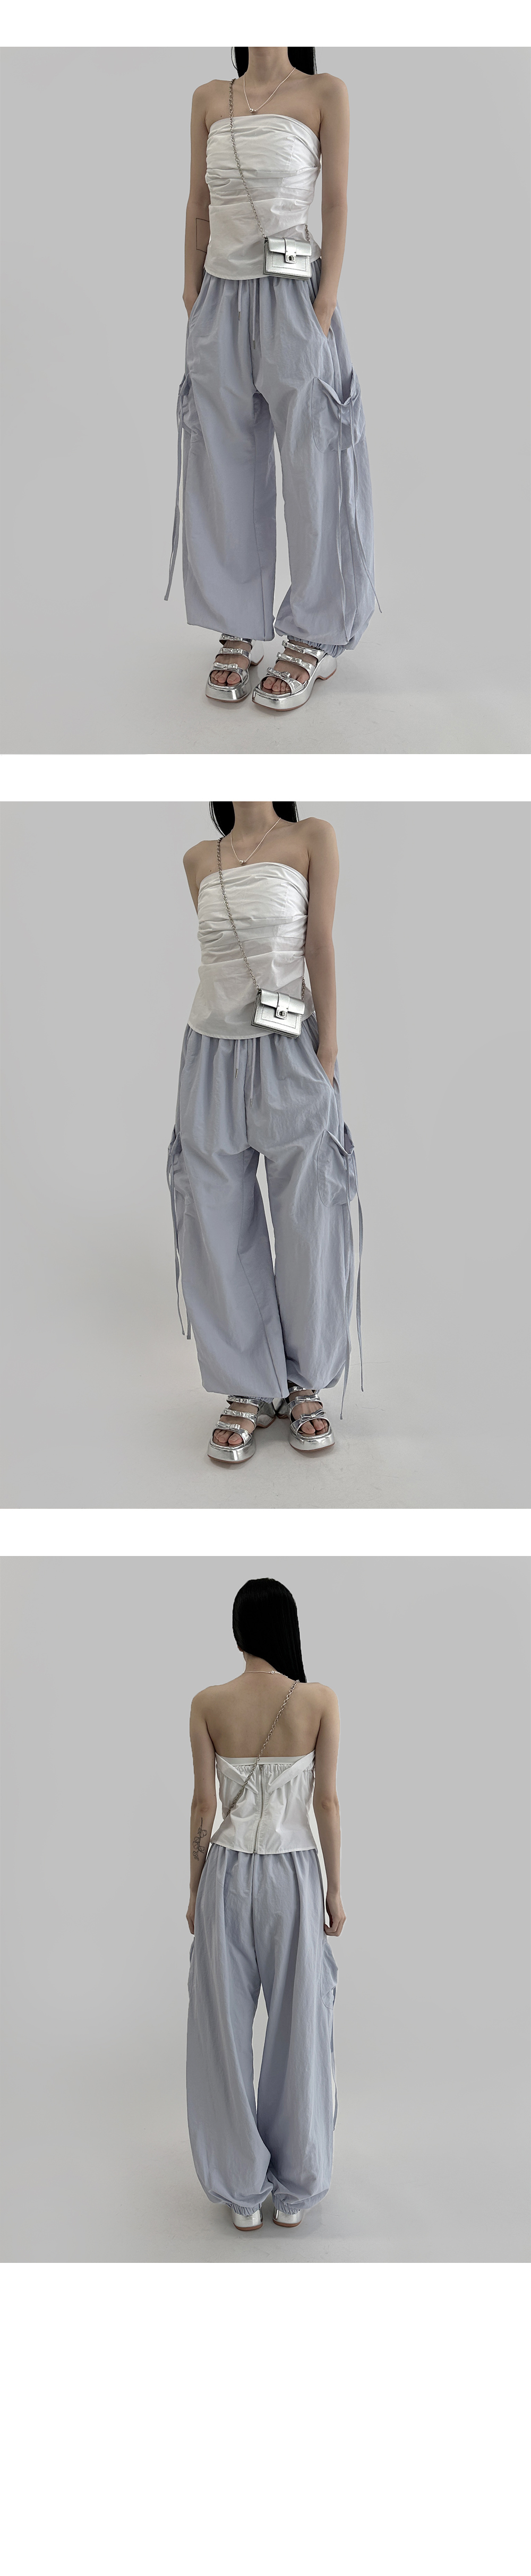 suspenders skirt/pants charcoal color image-S1L6